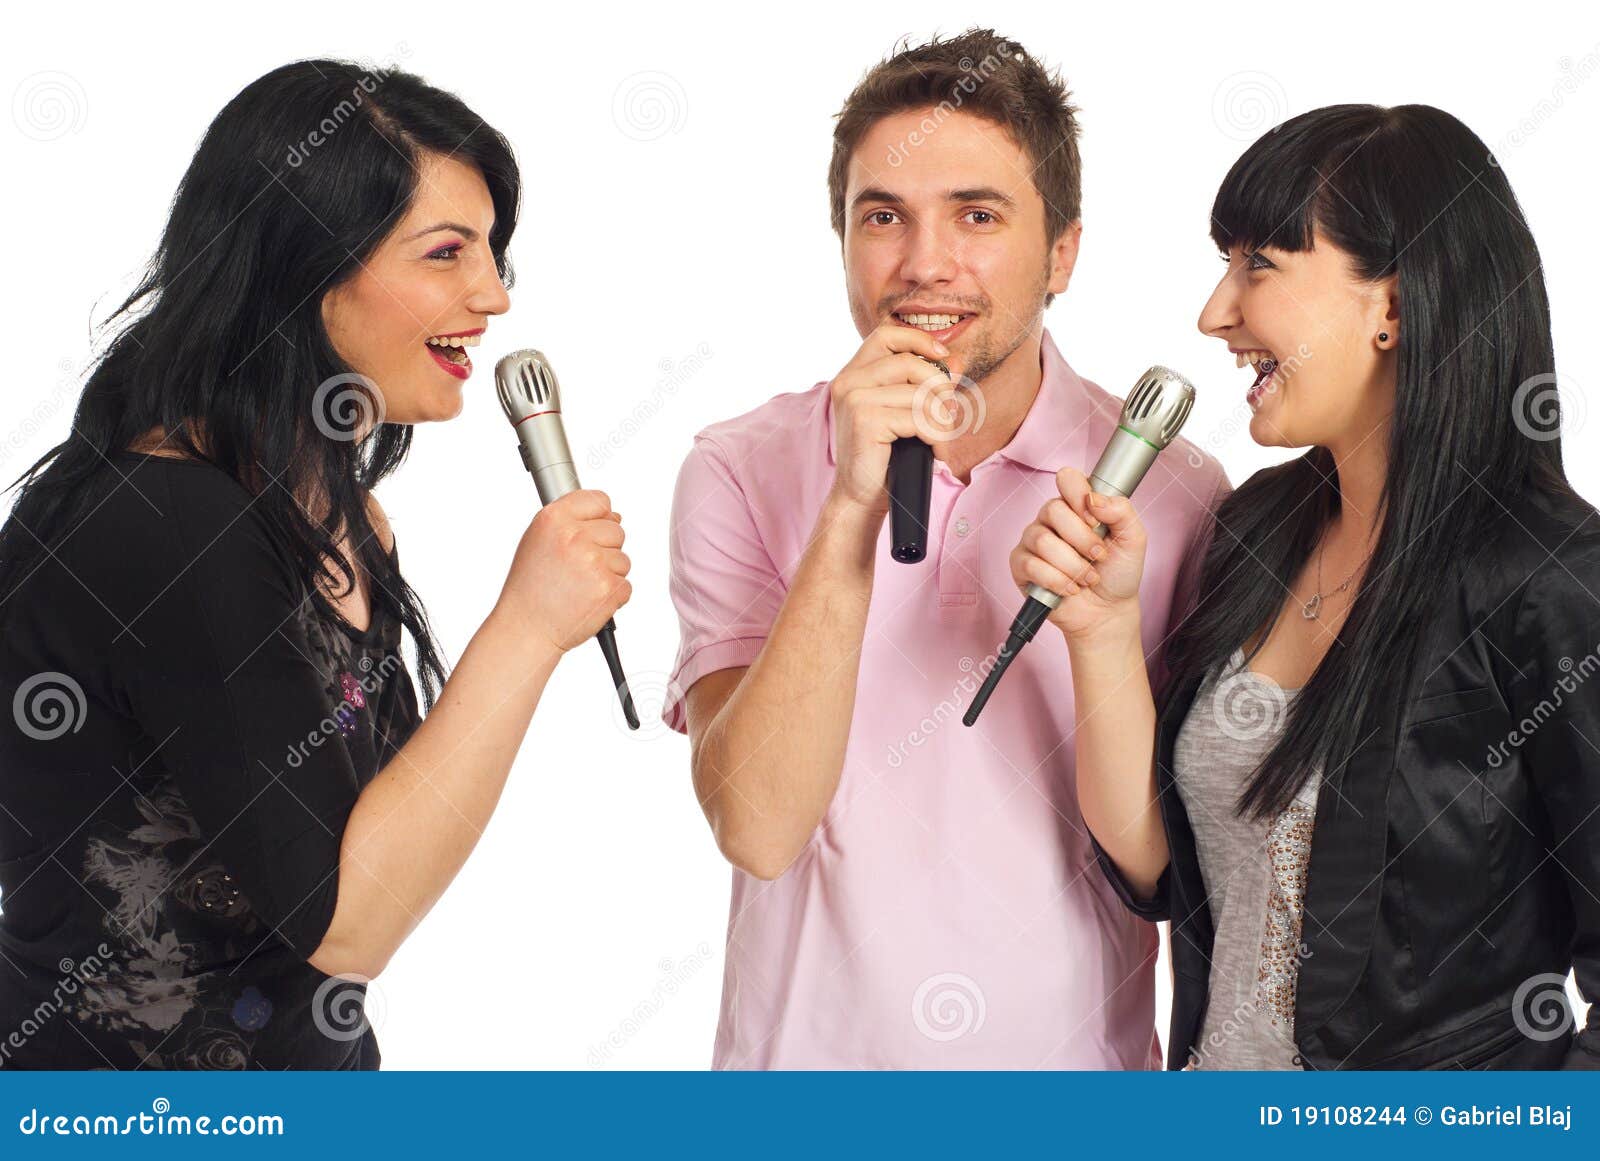 happy friends singing at karaoke party